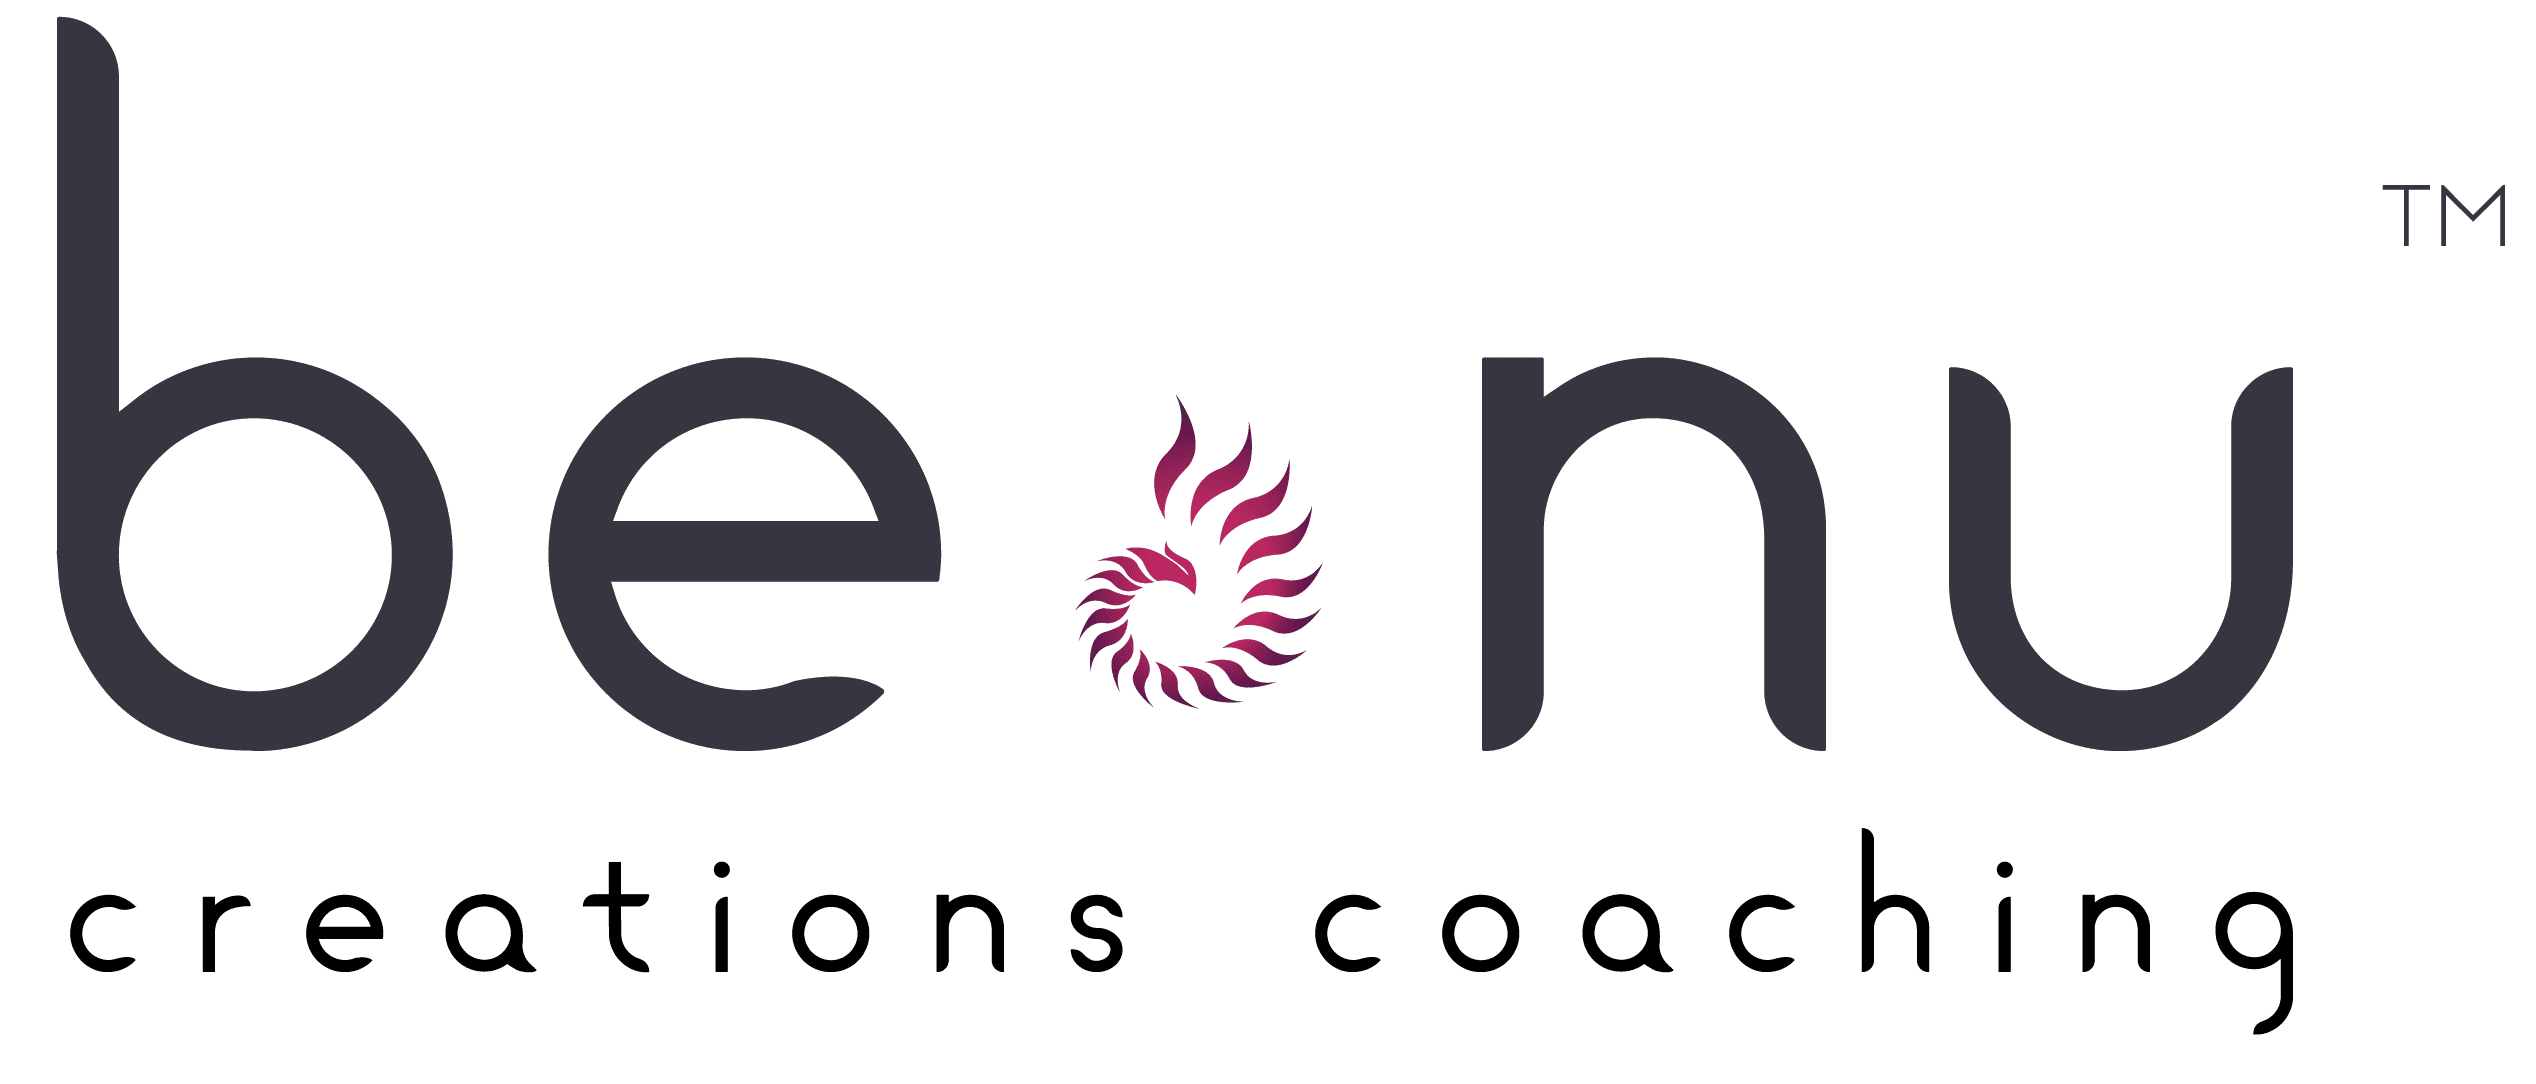 benu creations coaching logo horizontal logo